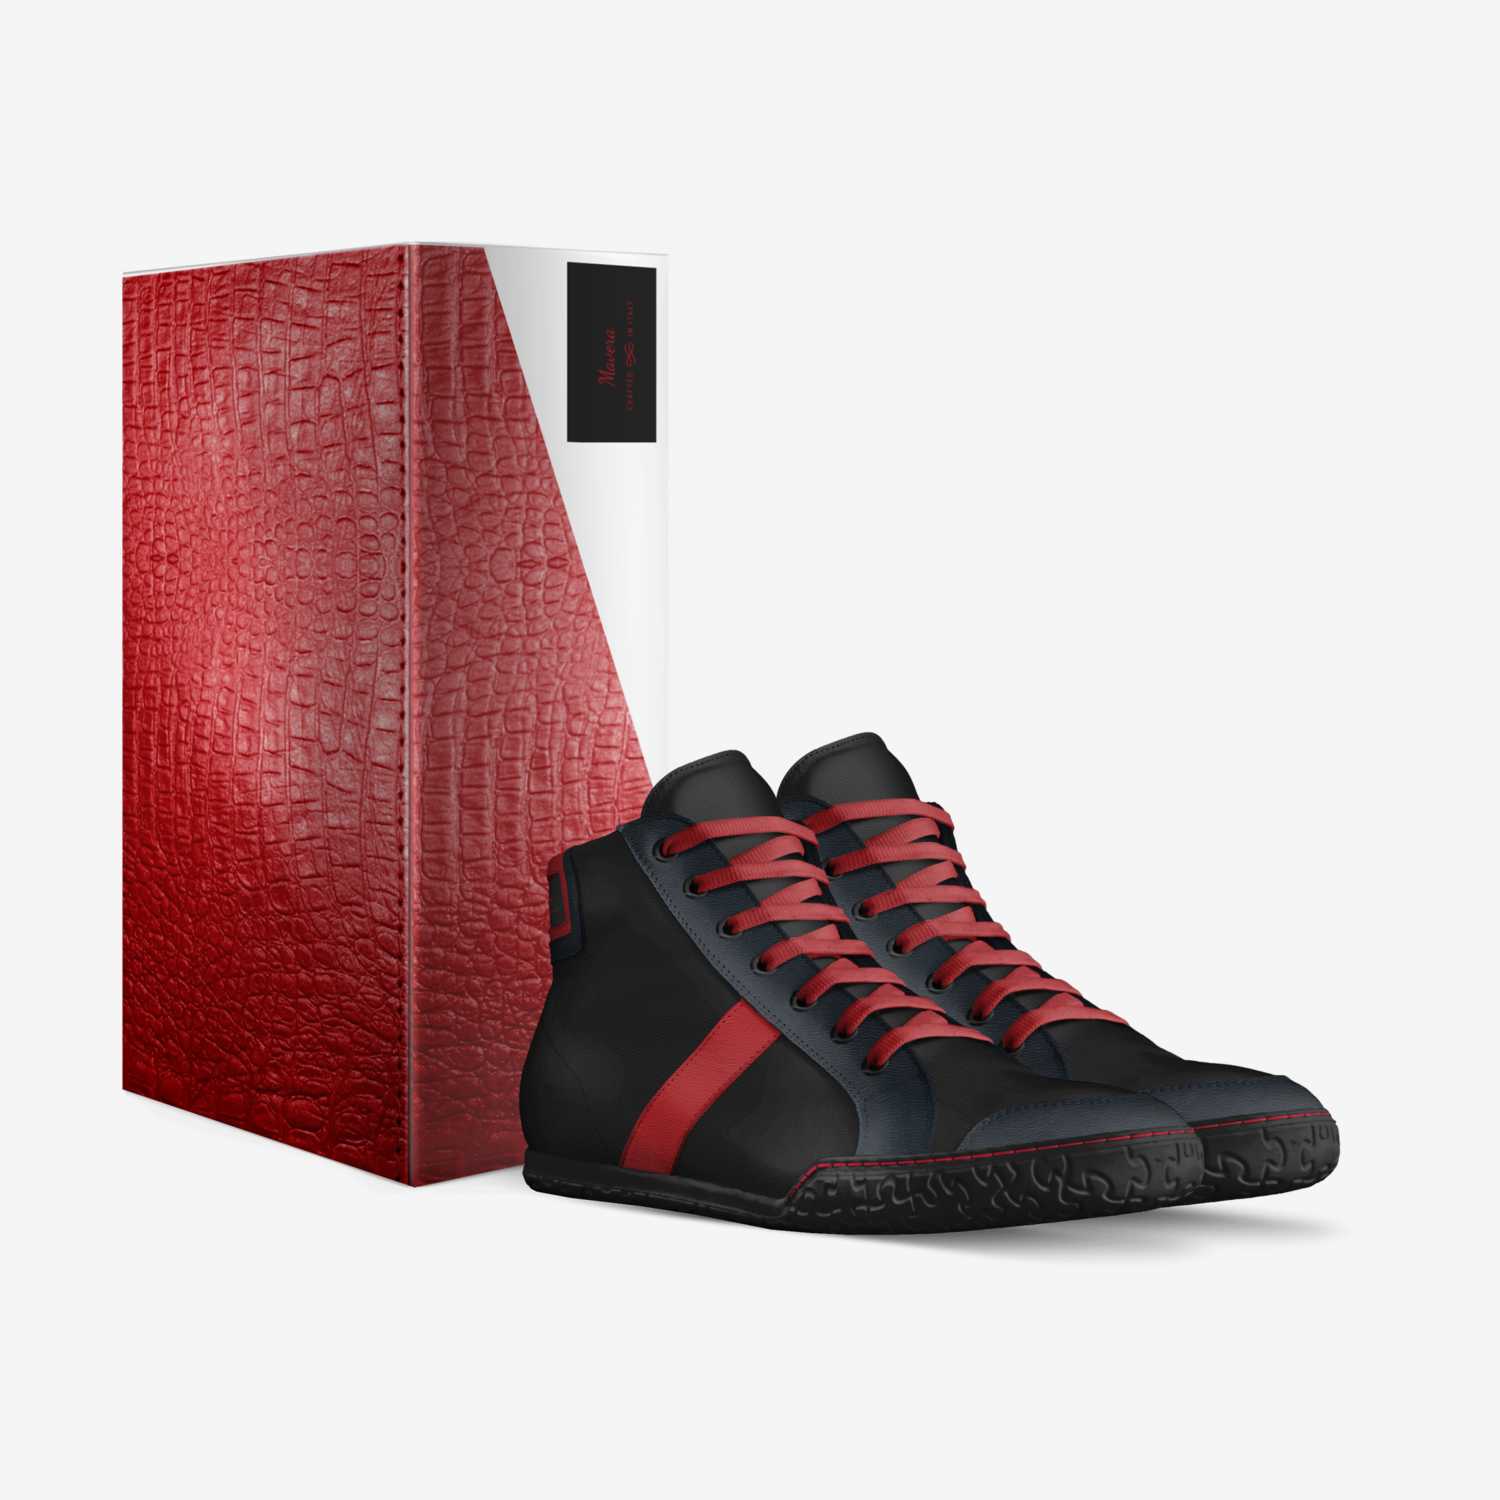 Mavera  custom made in Italy shoes by Manuel Mayas | Box view